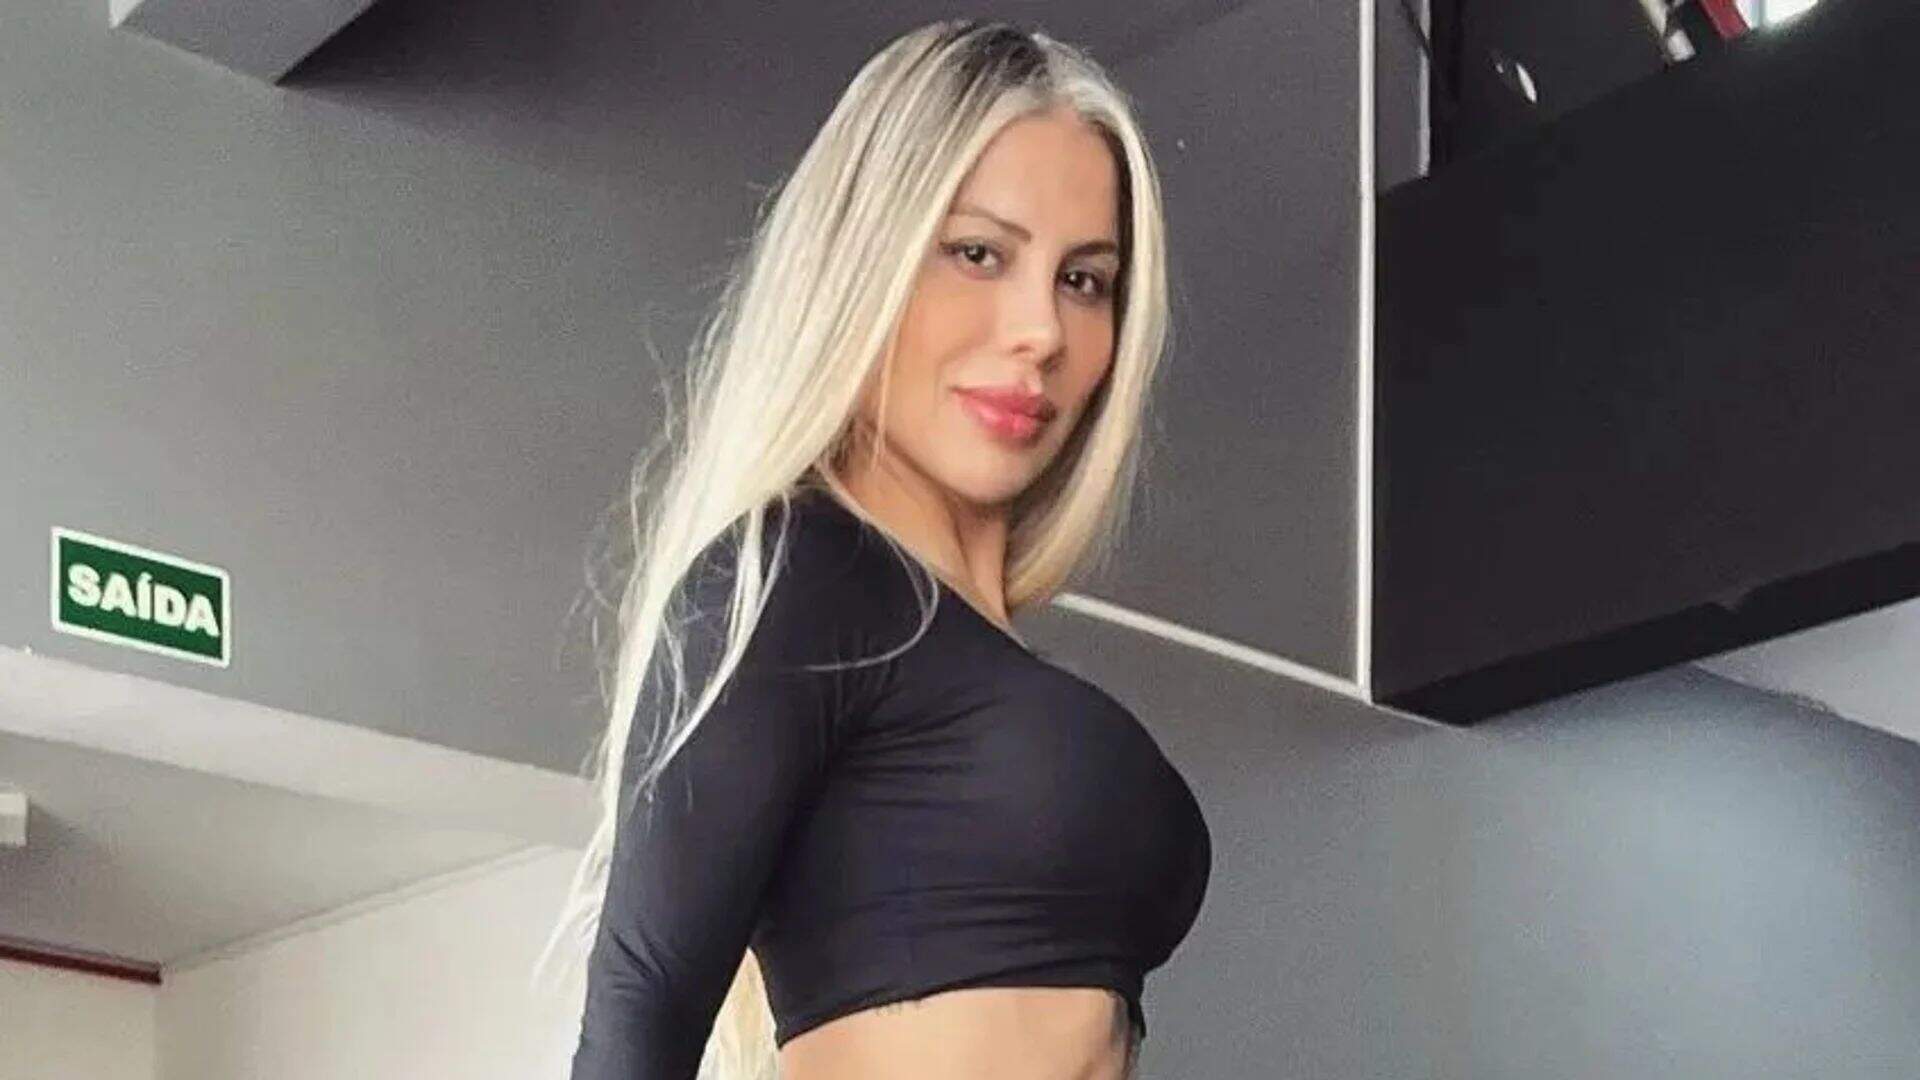 Vanessa Mesquita comemora resultado de cirurgia íntima: “Jovial” - Metropolitana FM